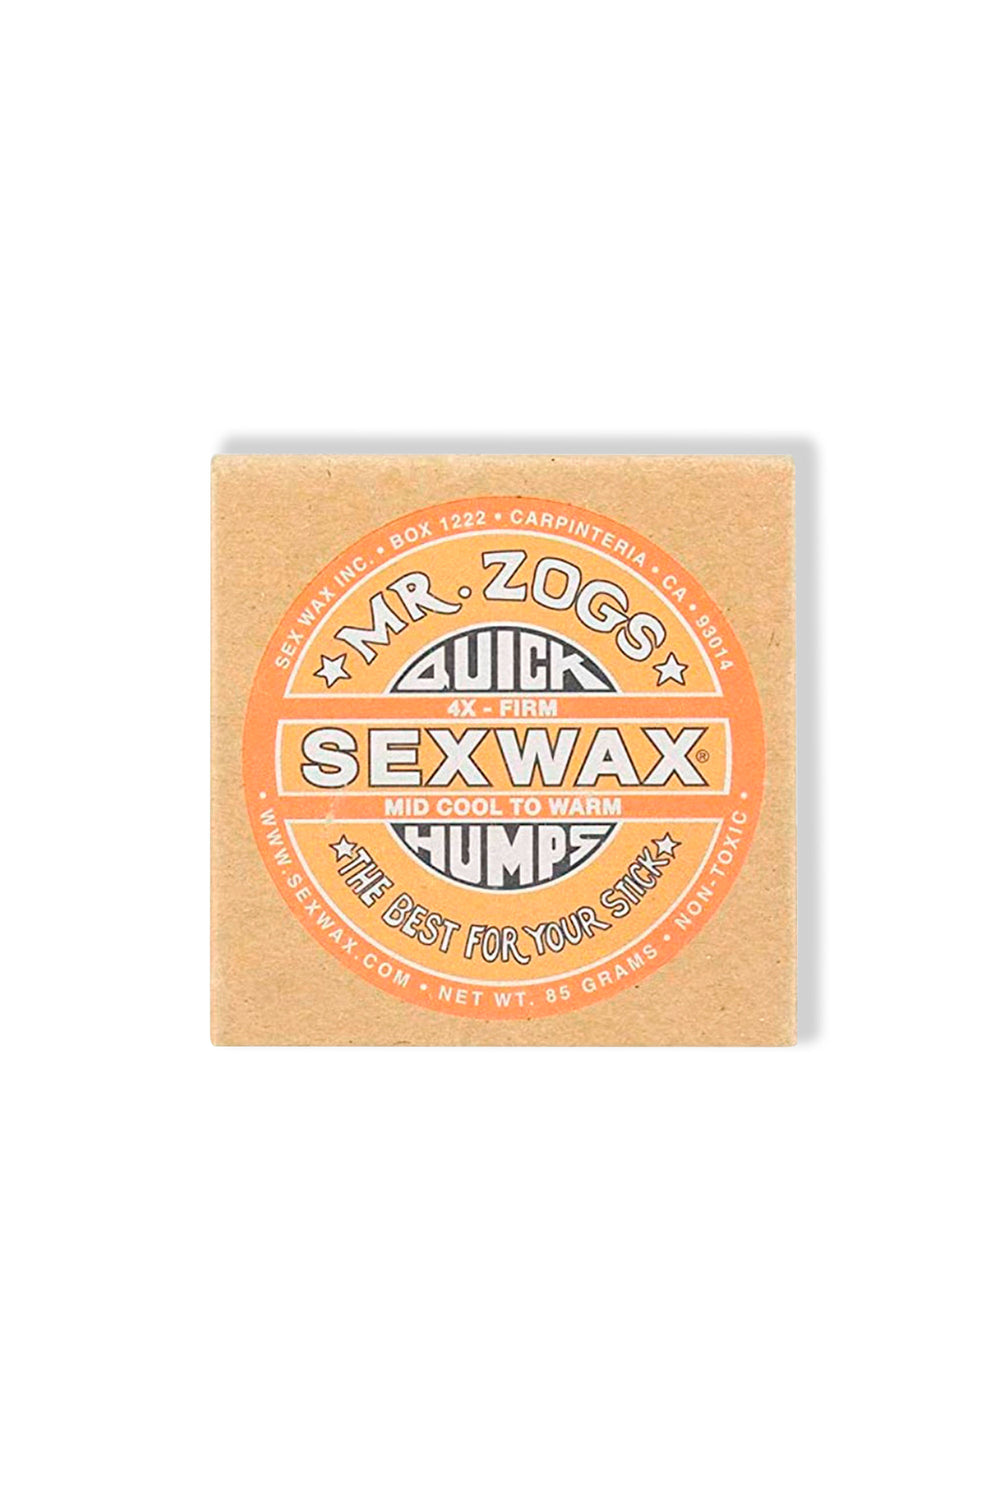 PukasSurfShop-SexWax-Orange